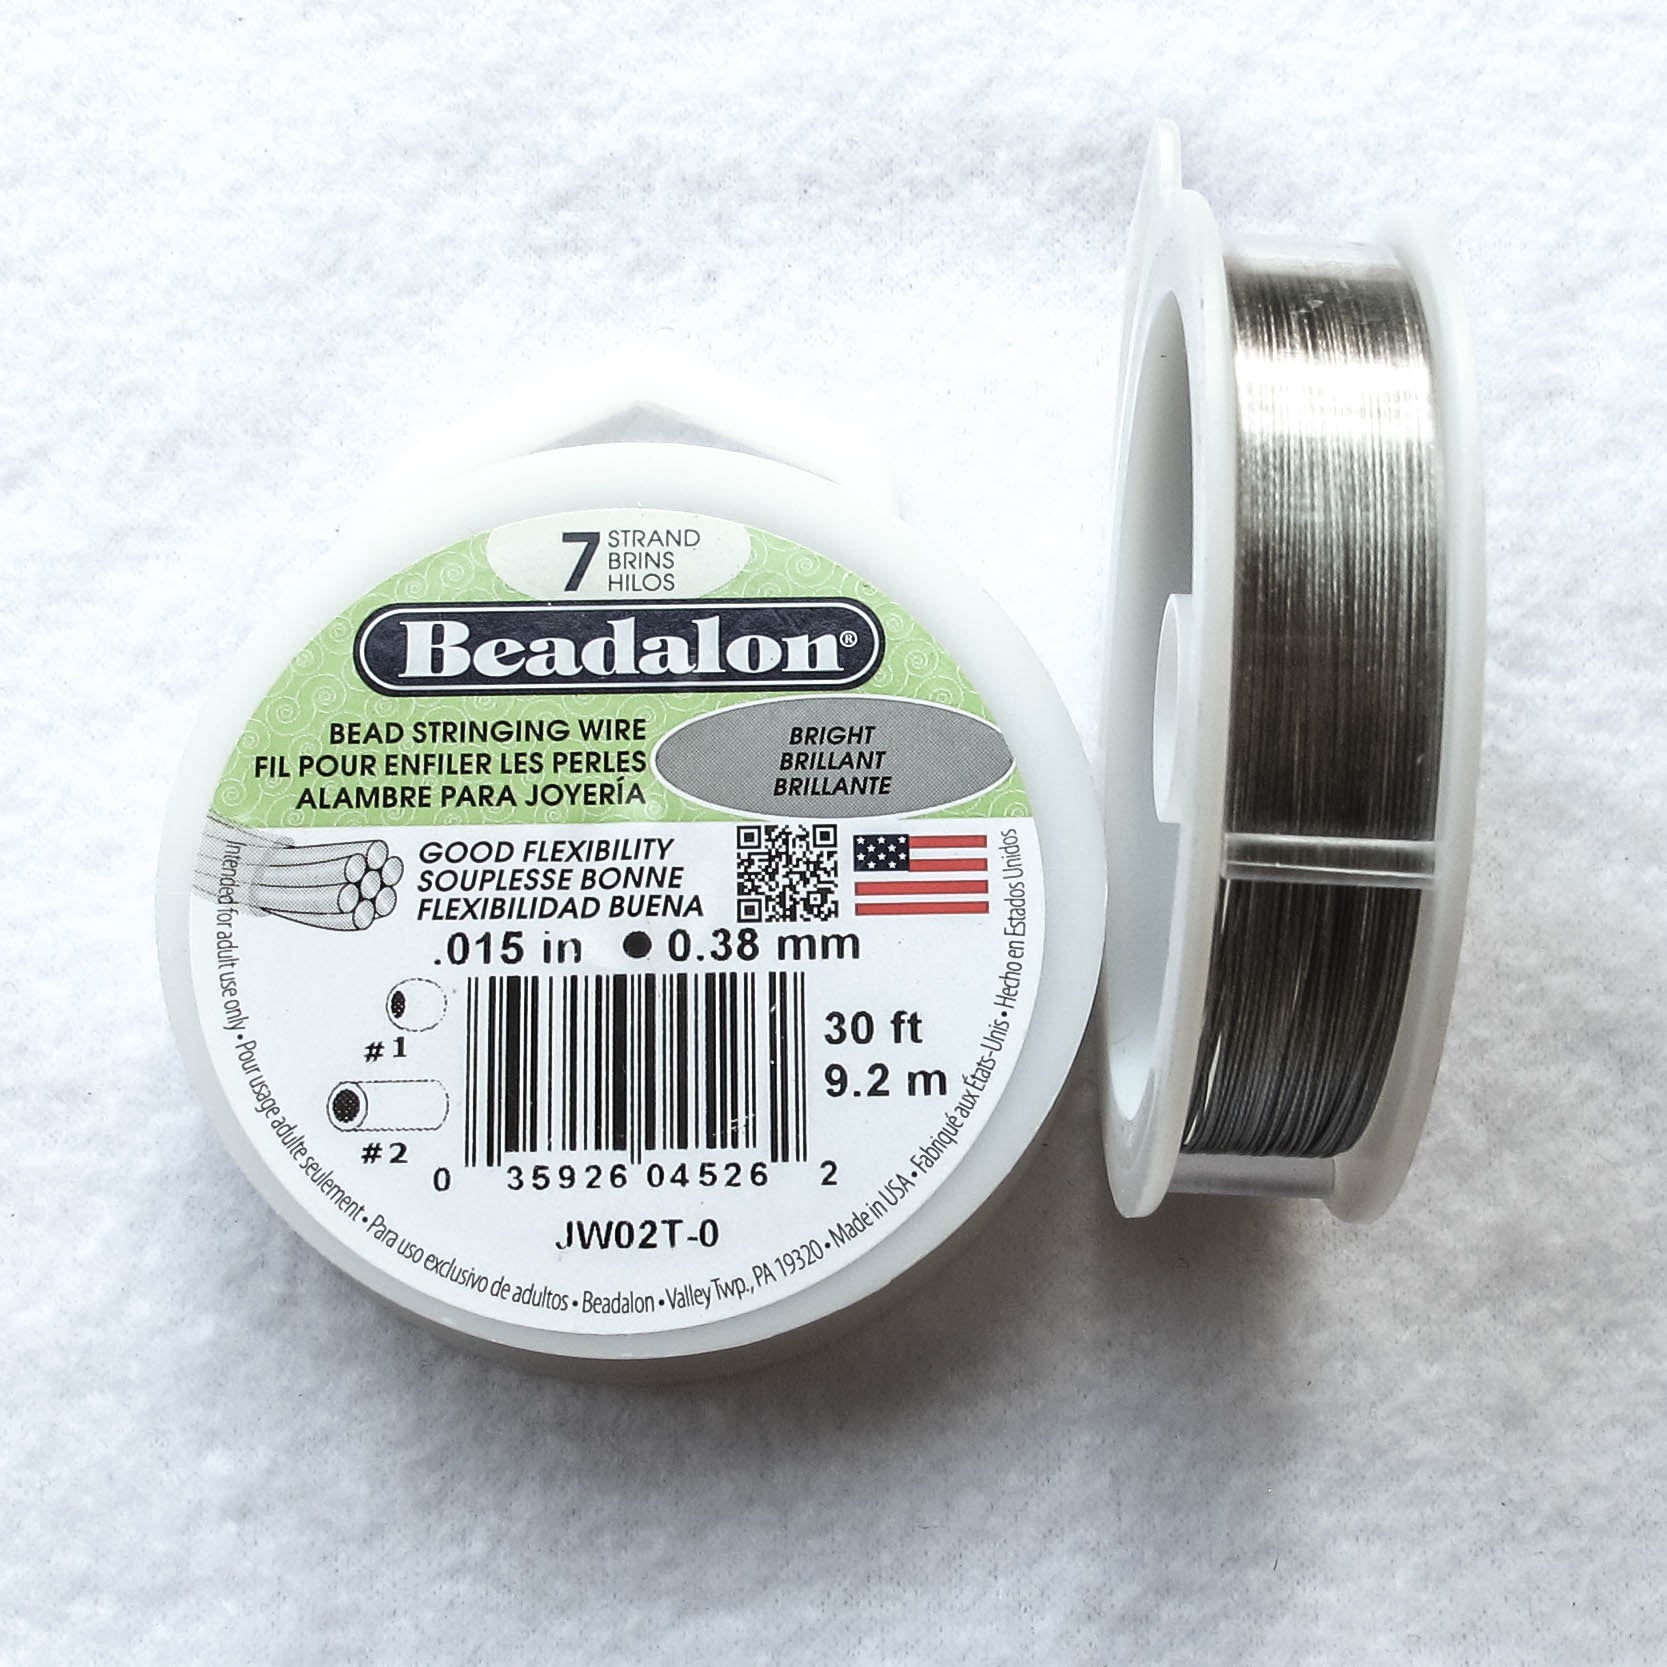 Beadalon 7 Strand Bead Stringing Wire .015-inch Bright